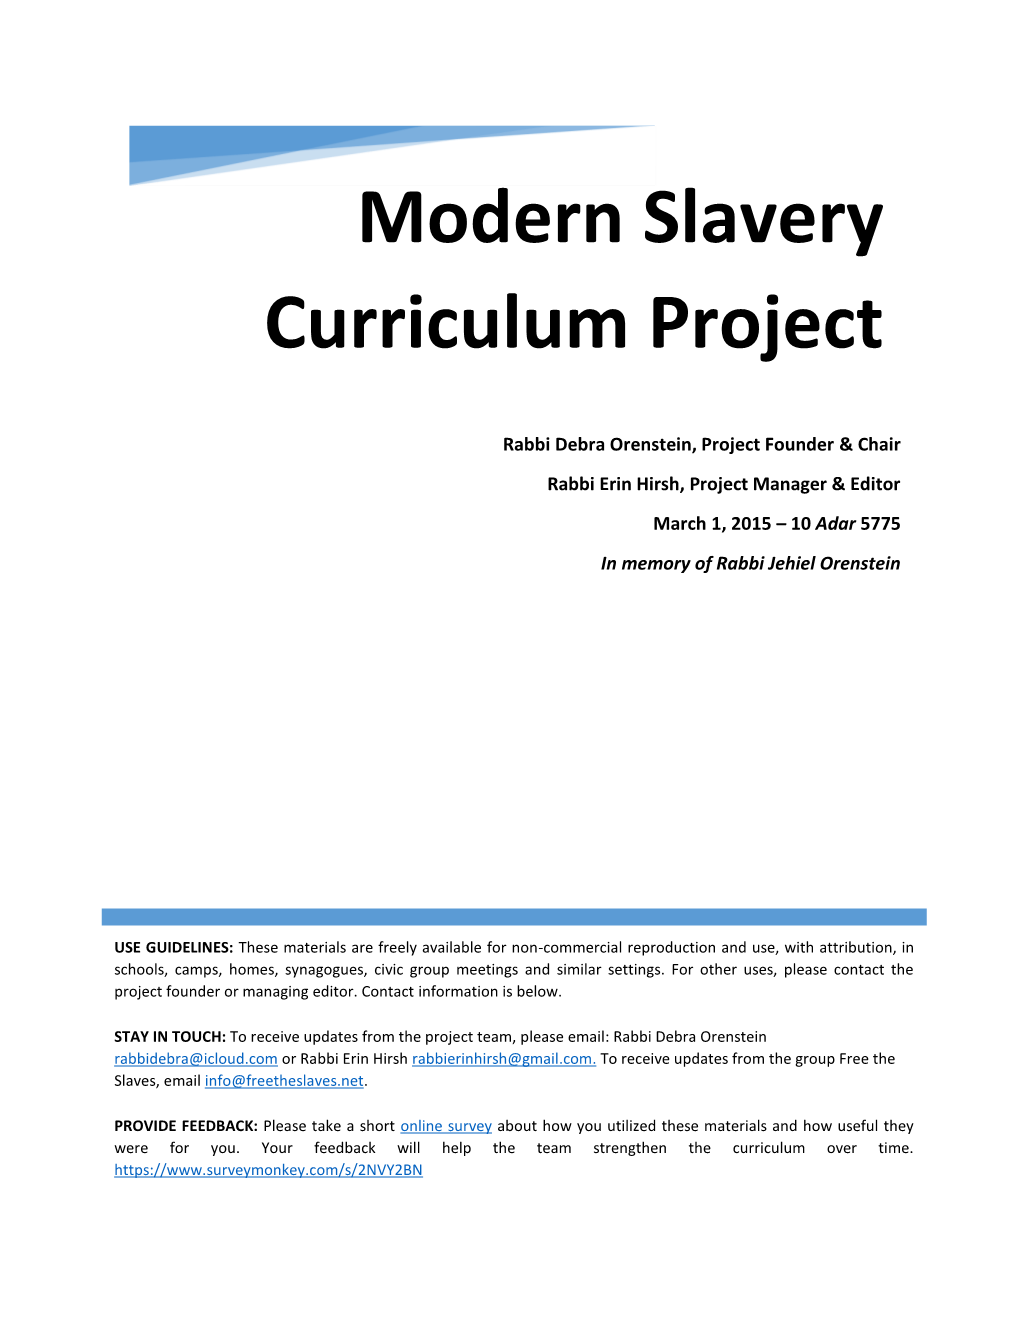 Modern Slavery Curriculum Project